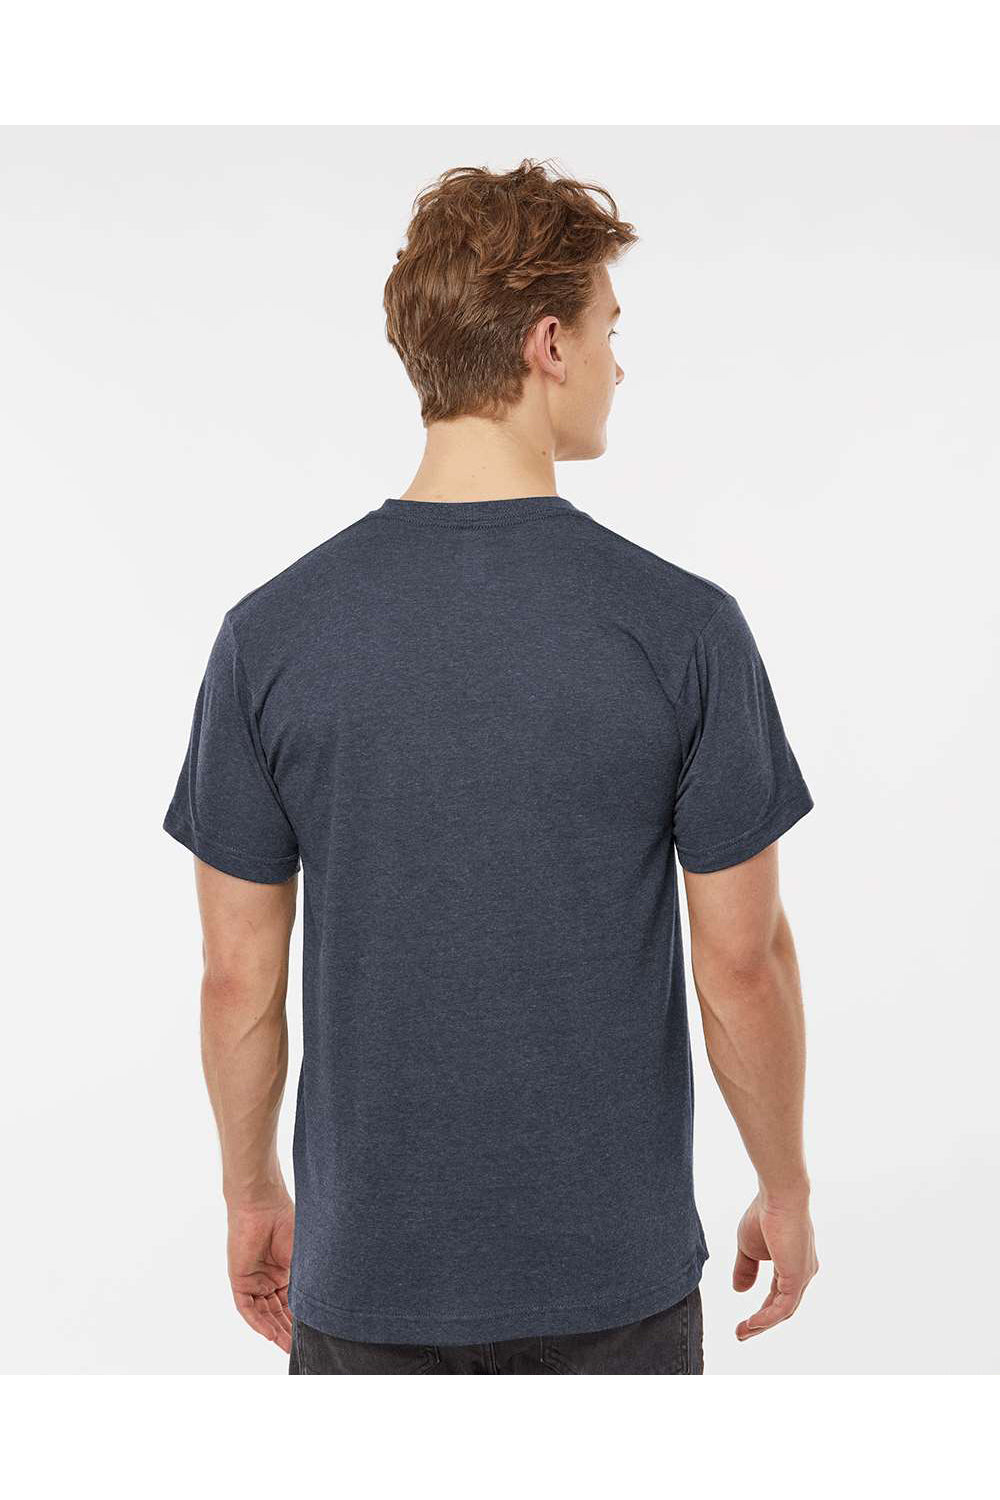 Tultex 207 Mens Poly-Rich Short Sleeve V-Neck T-Shirt Heather Navy Blue Model Back